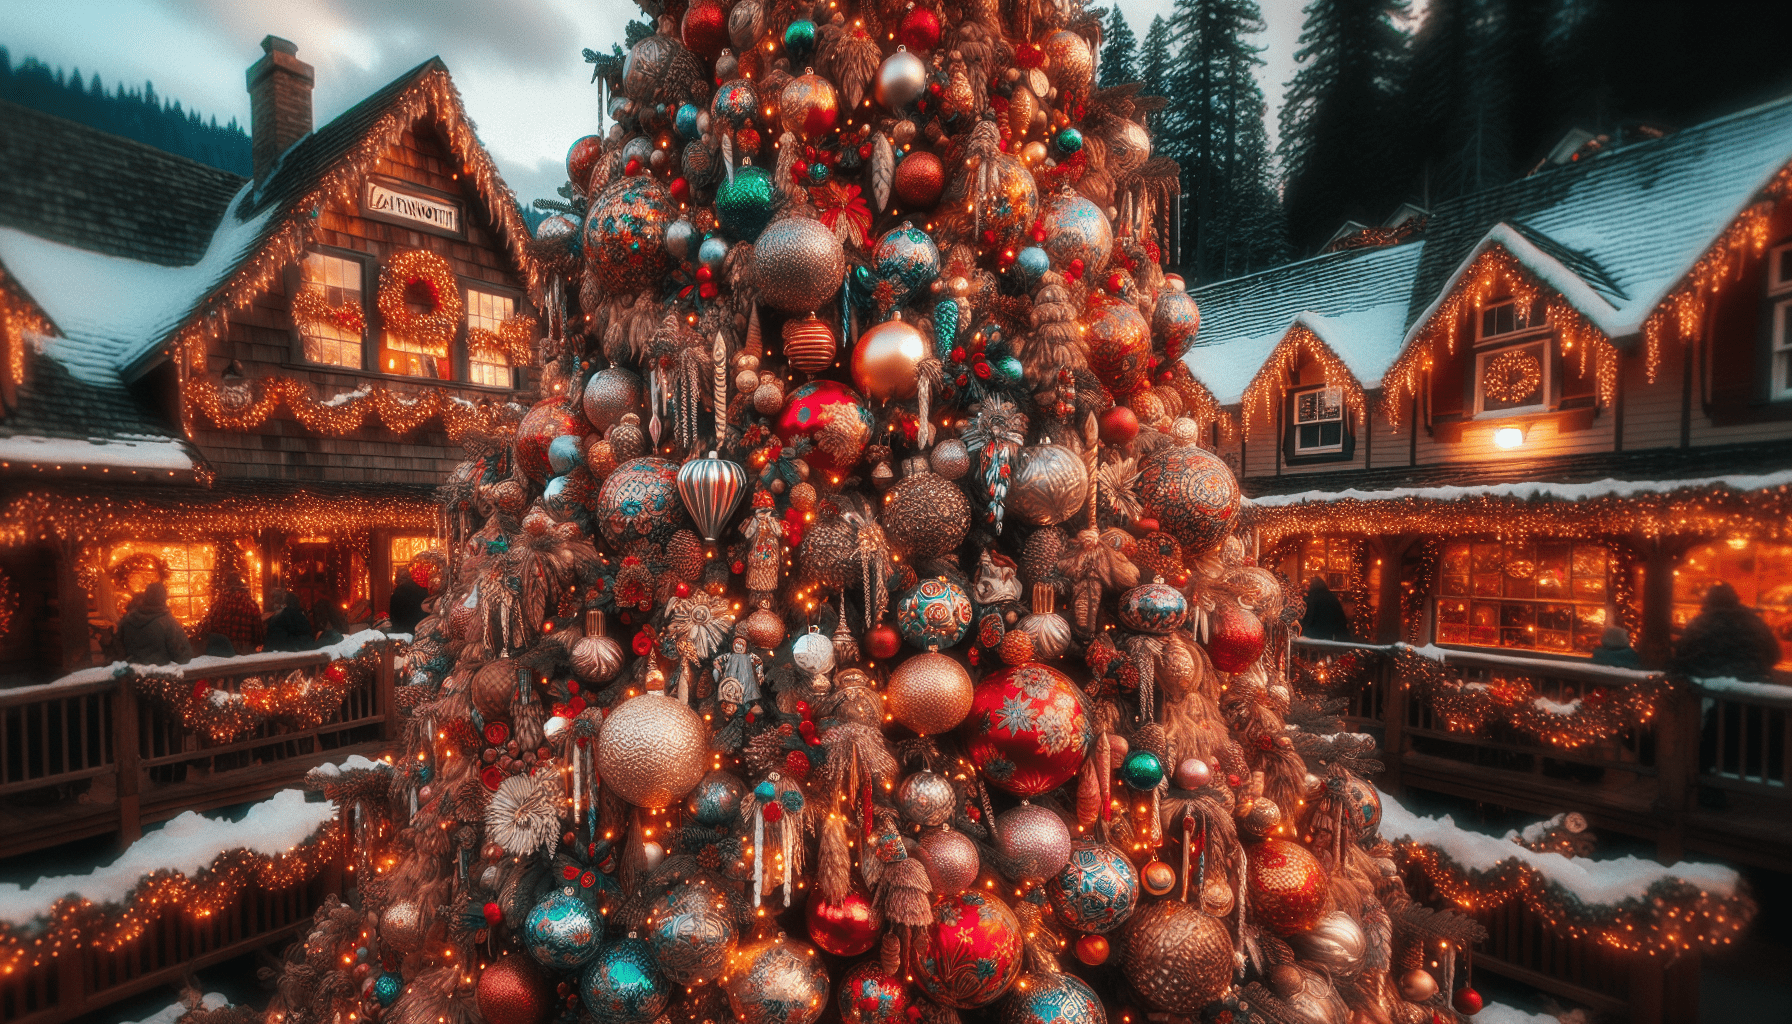 Exploring Leavenworth: The Top Christmas Town in America